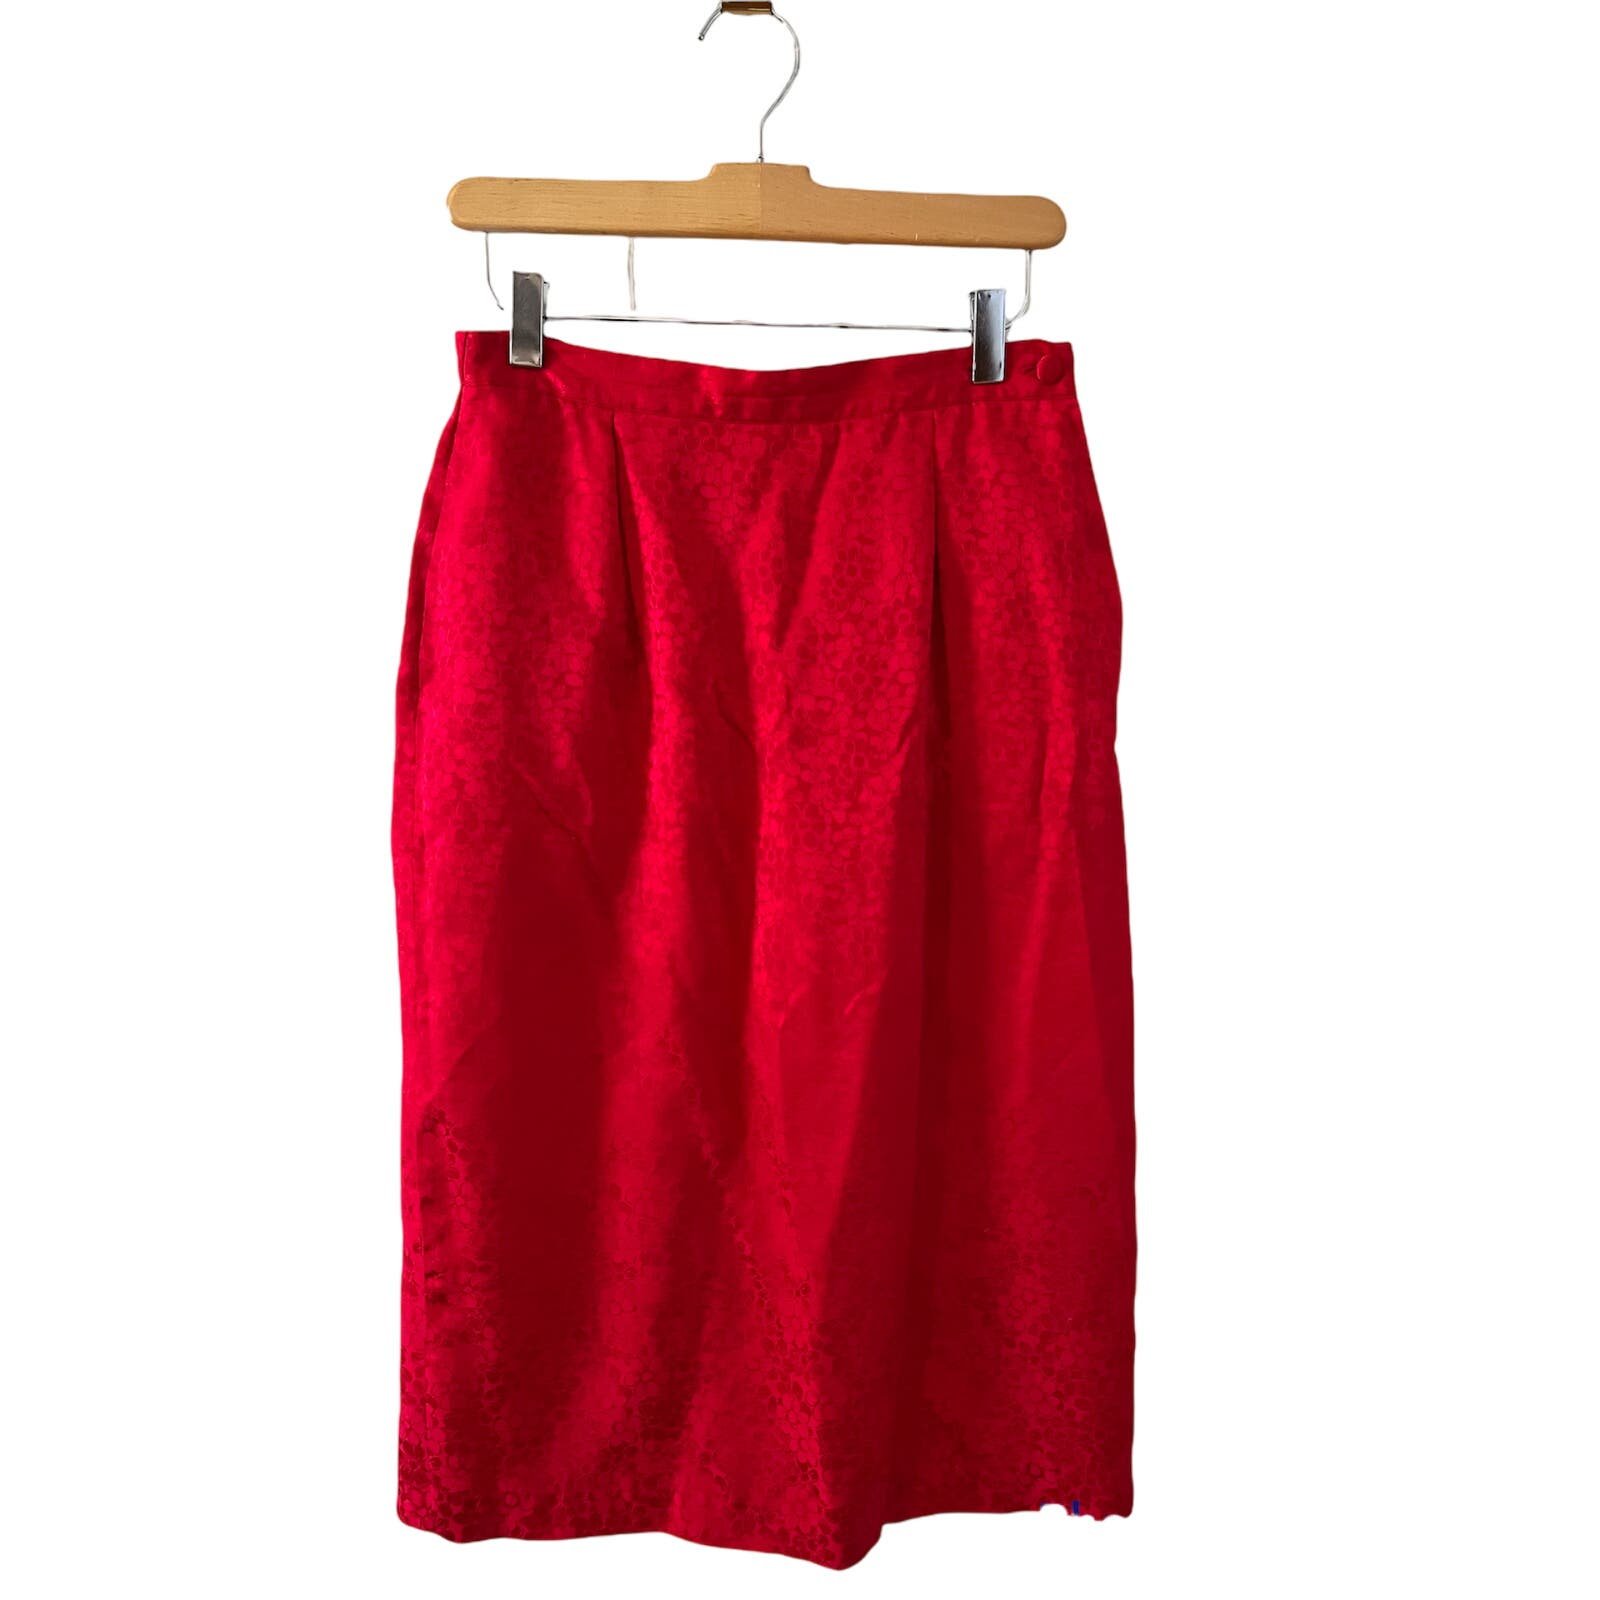 Buy Vintage silk midi skirt cherry red 6 J2sKfbdgW just